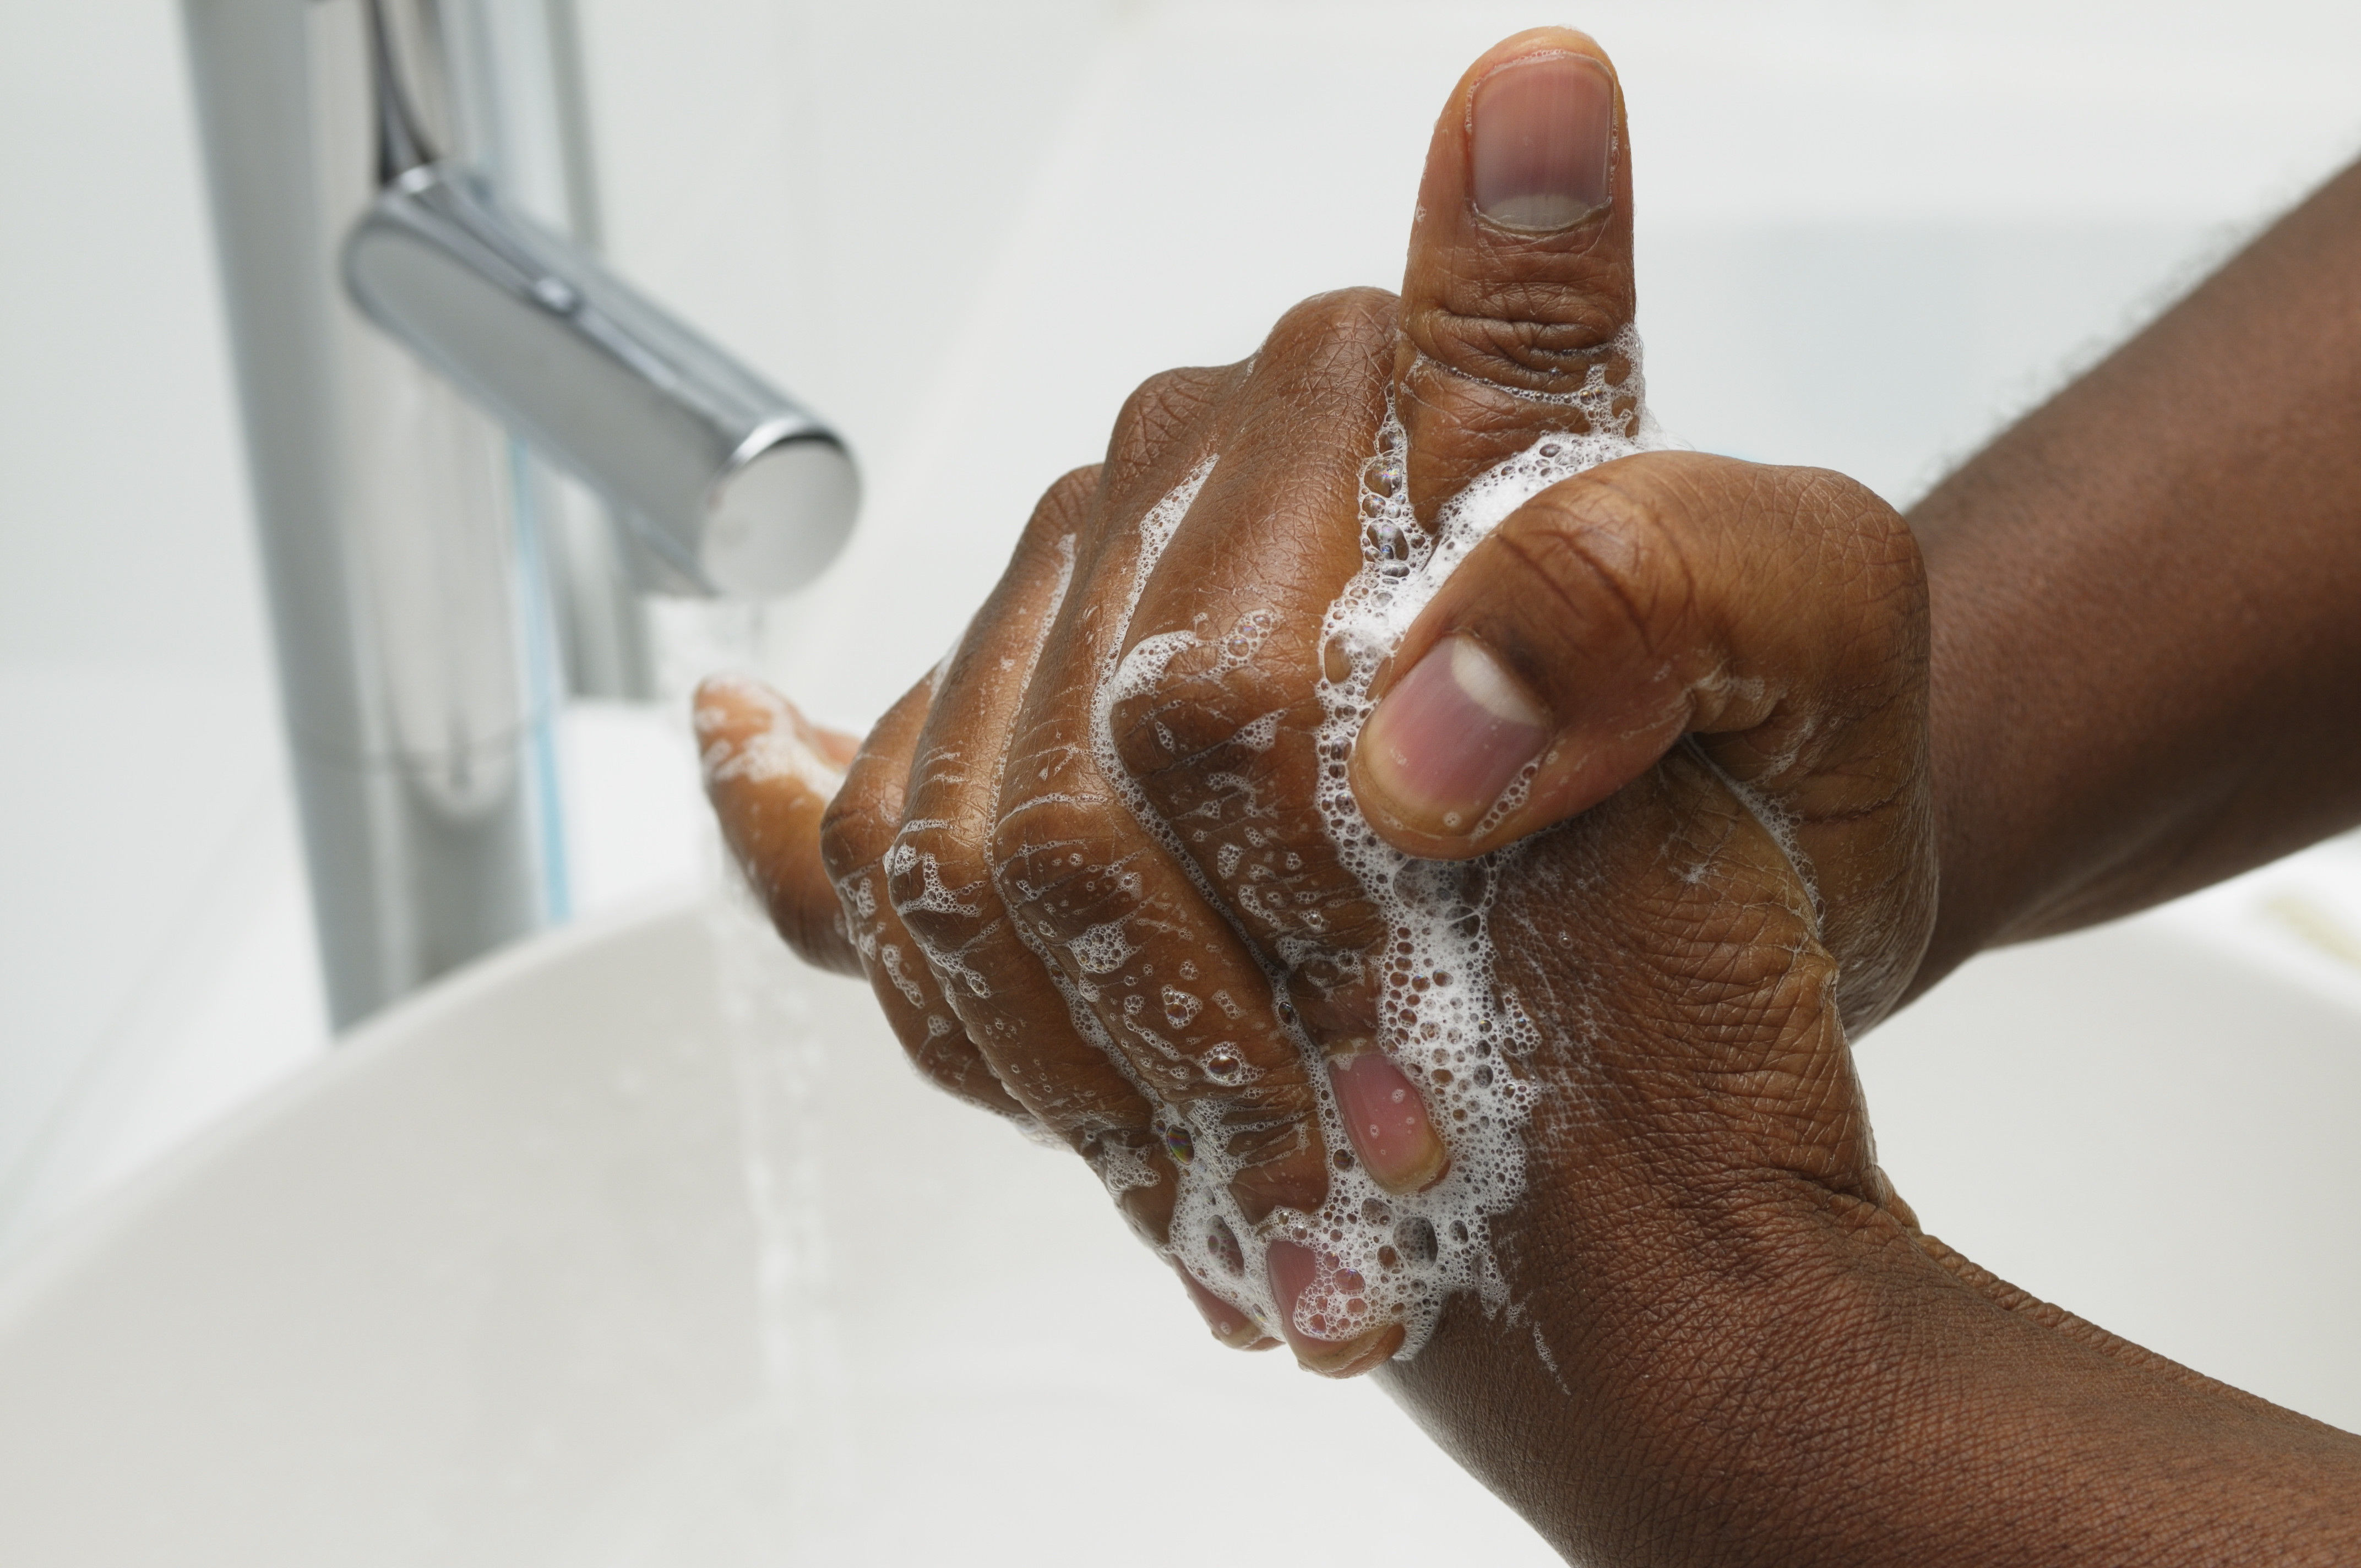 I wash my face and hands. Мытье рук. Мыло для рук. Мыть руки. Умываю руки.